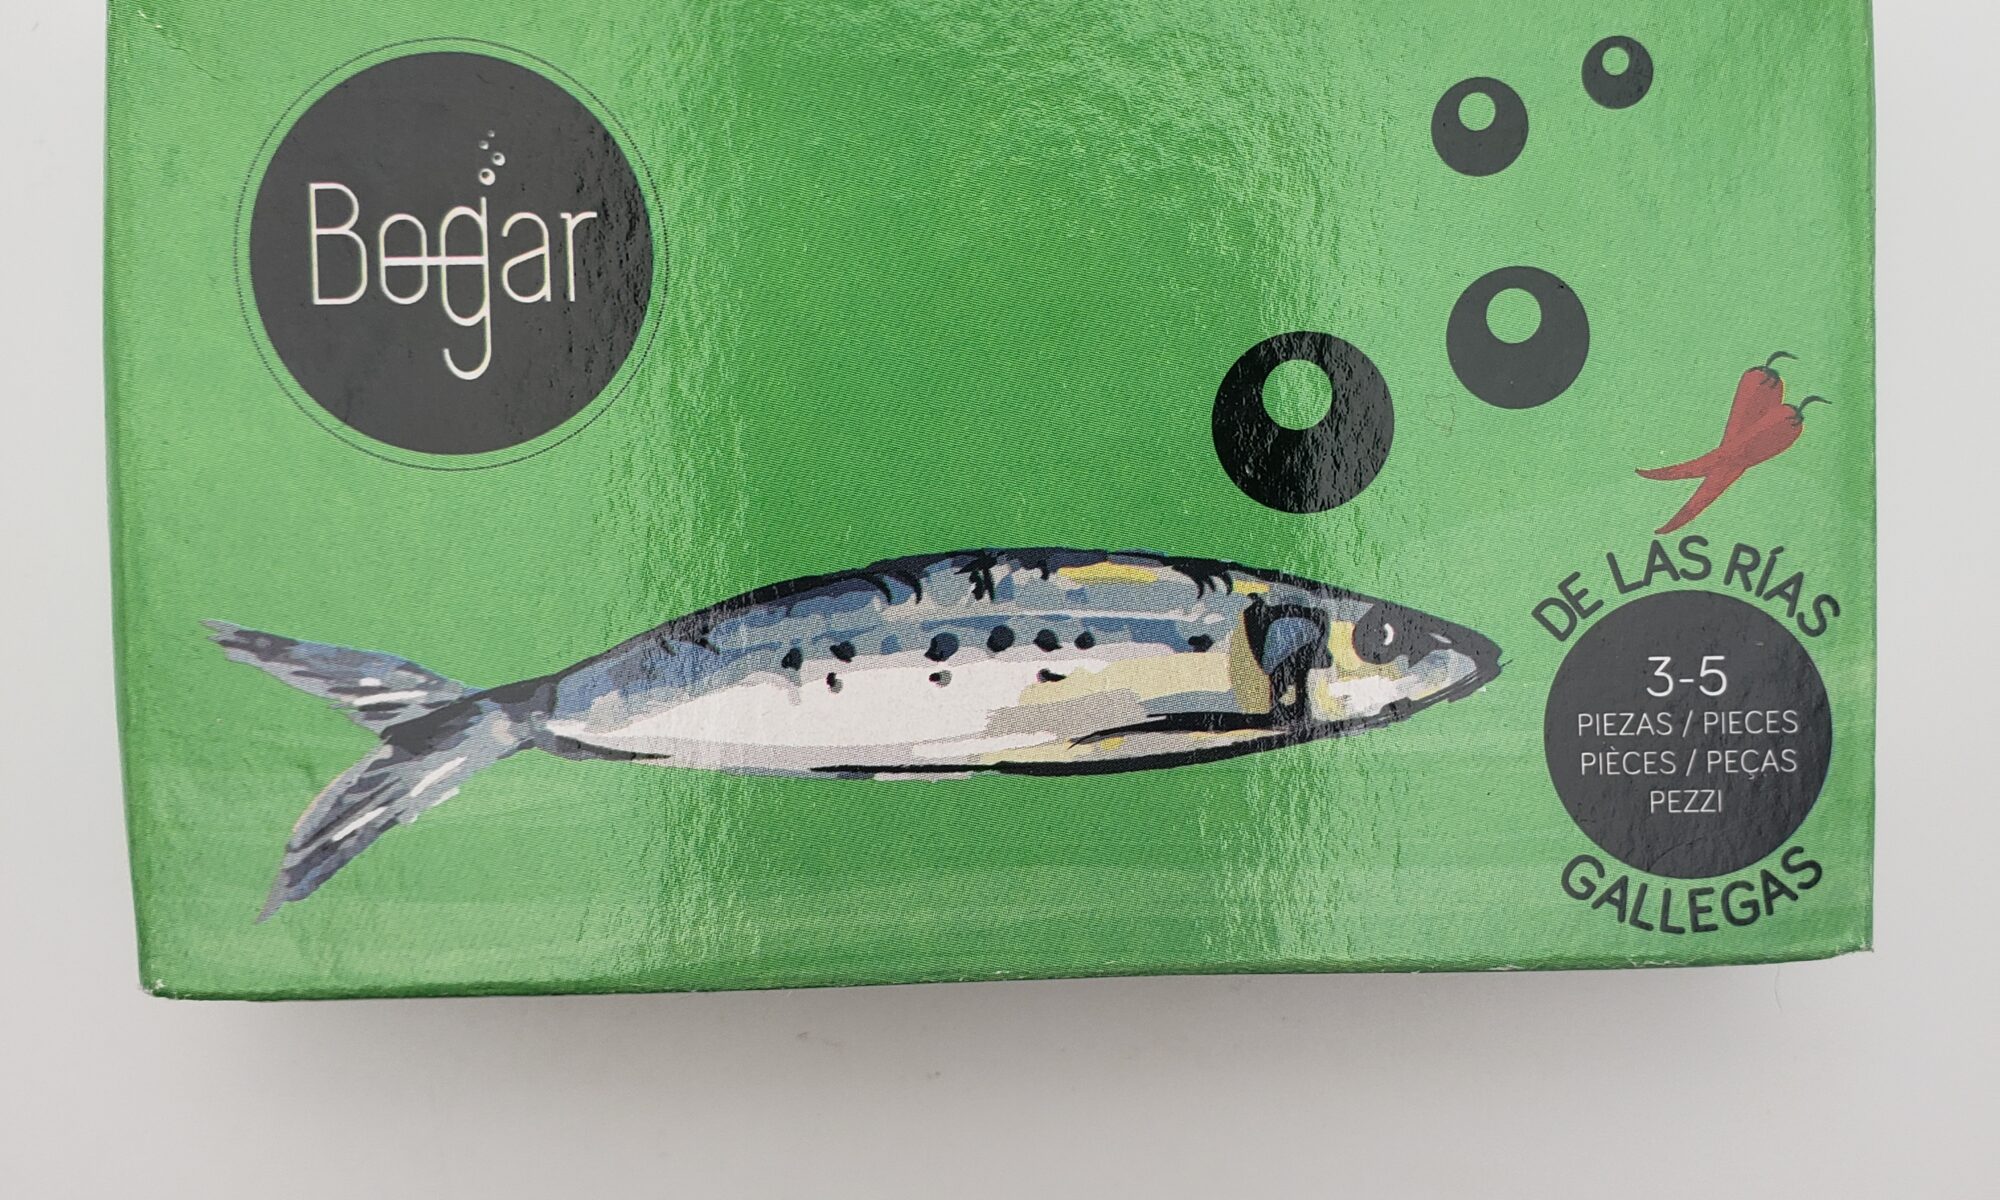 Image of Bogar spiced sardine box